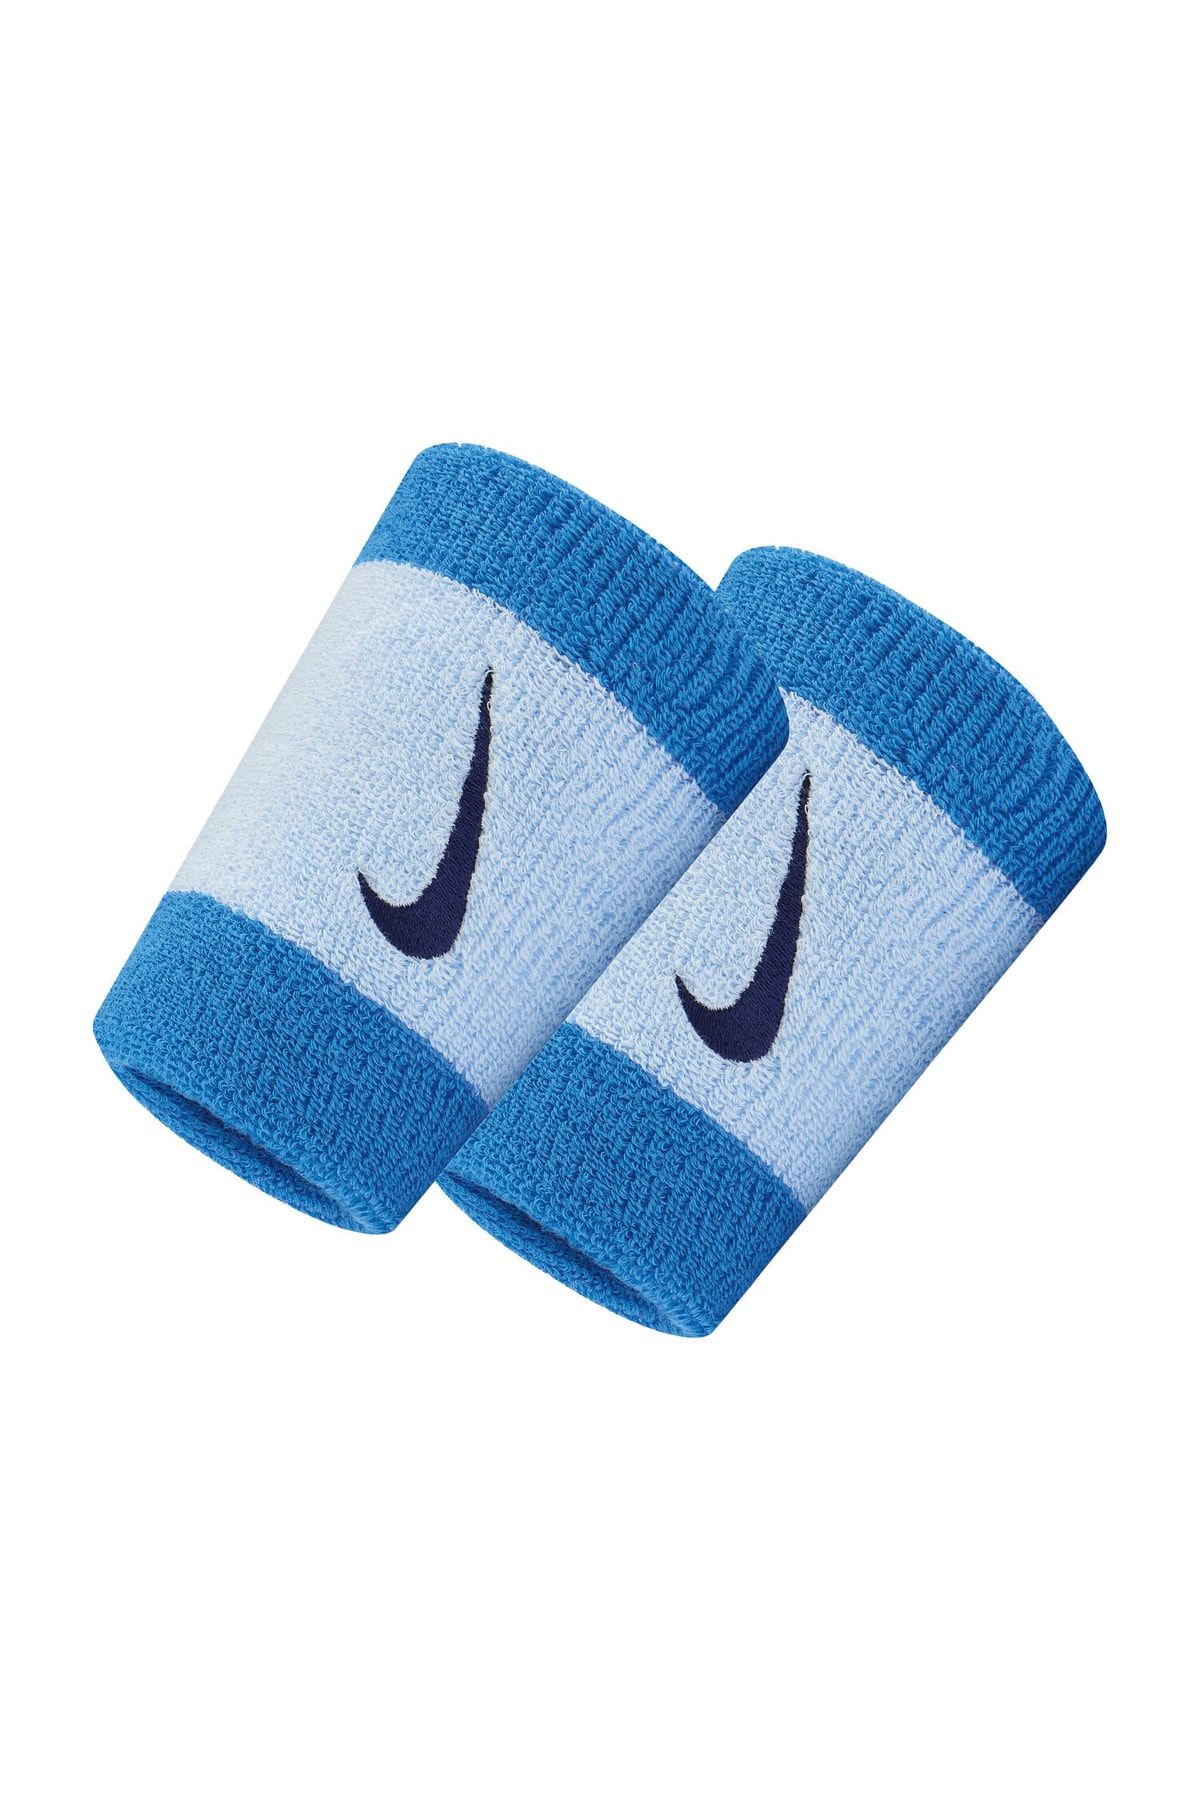 Nike Swoosh Wristbands Doublewide Havlu El Bilekliği N.000.1586.425.os